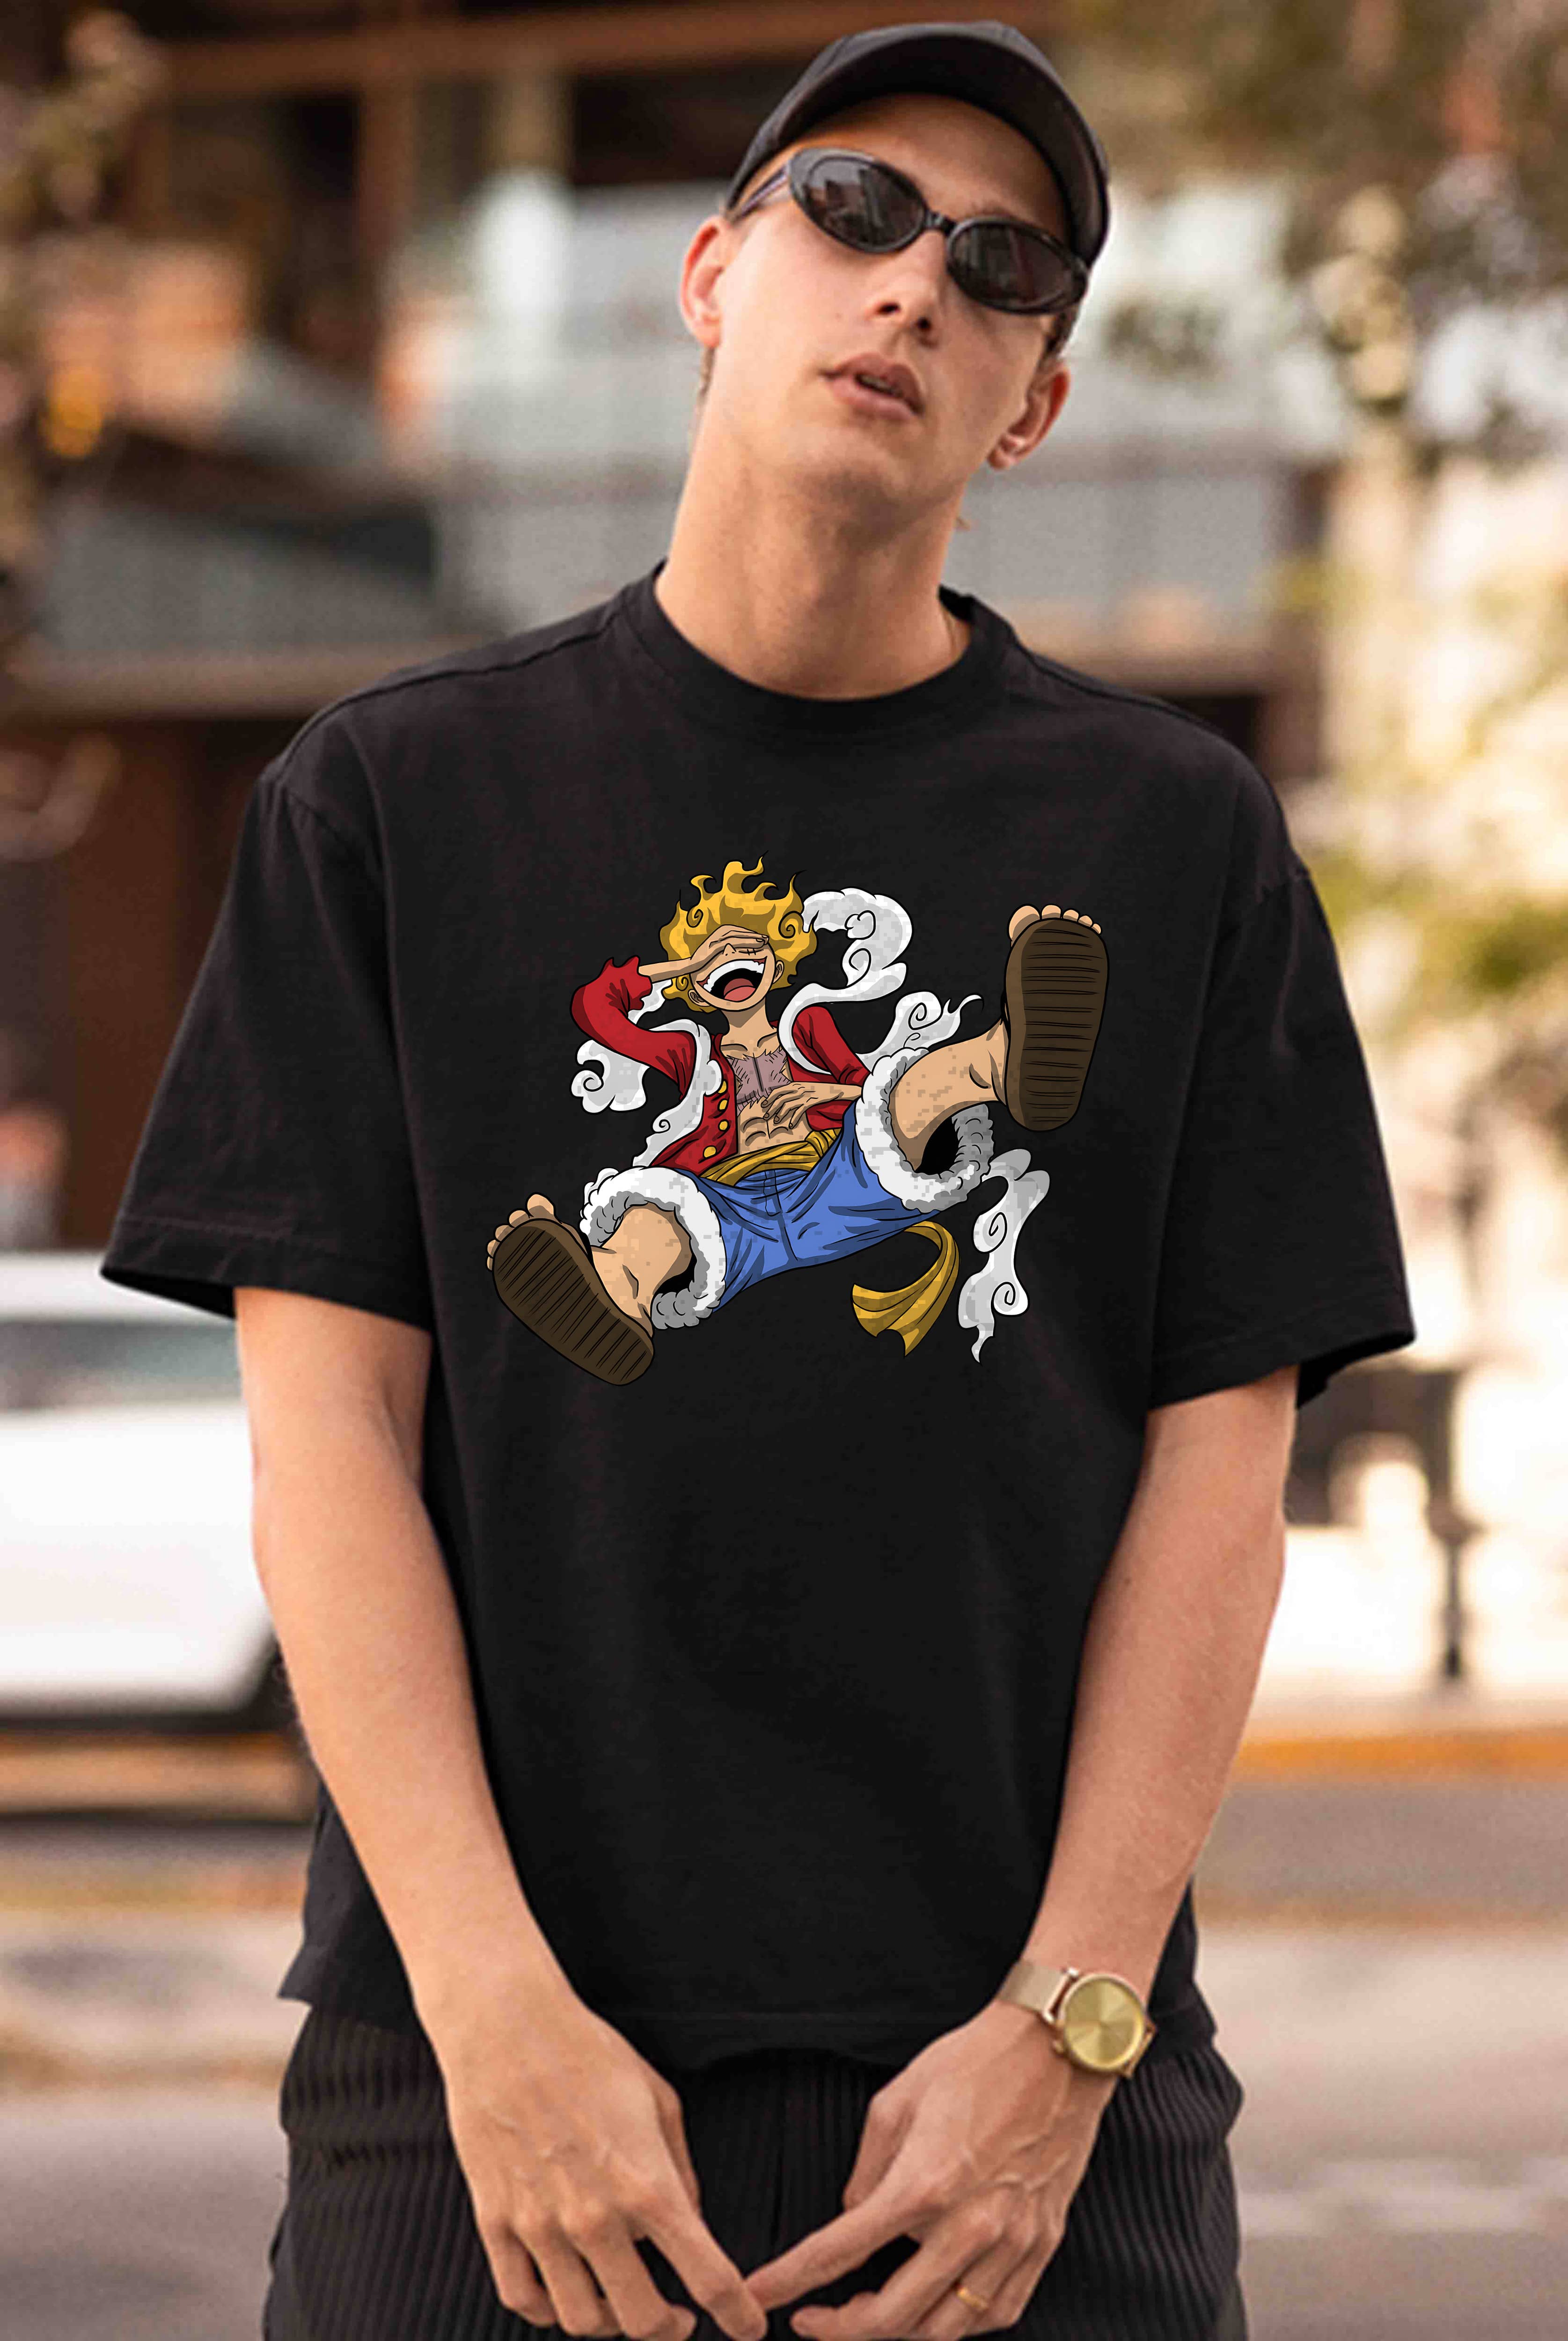 The Pirate King Men's Oversized Anime T-Shirt